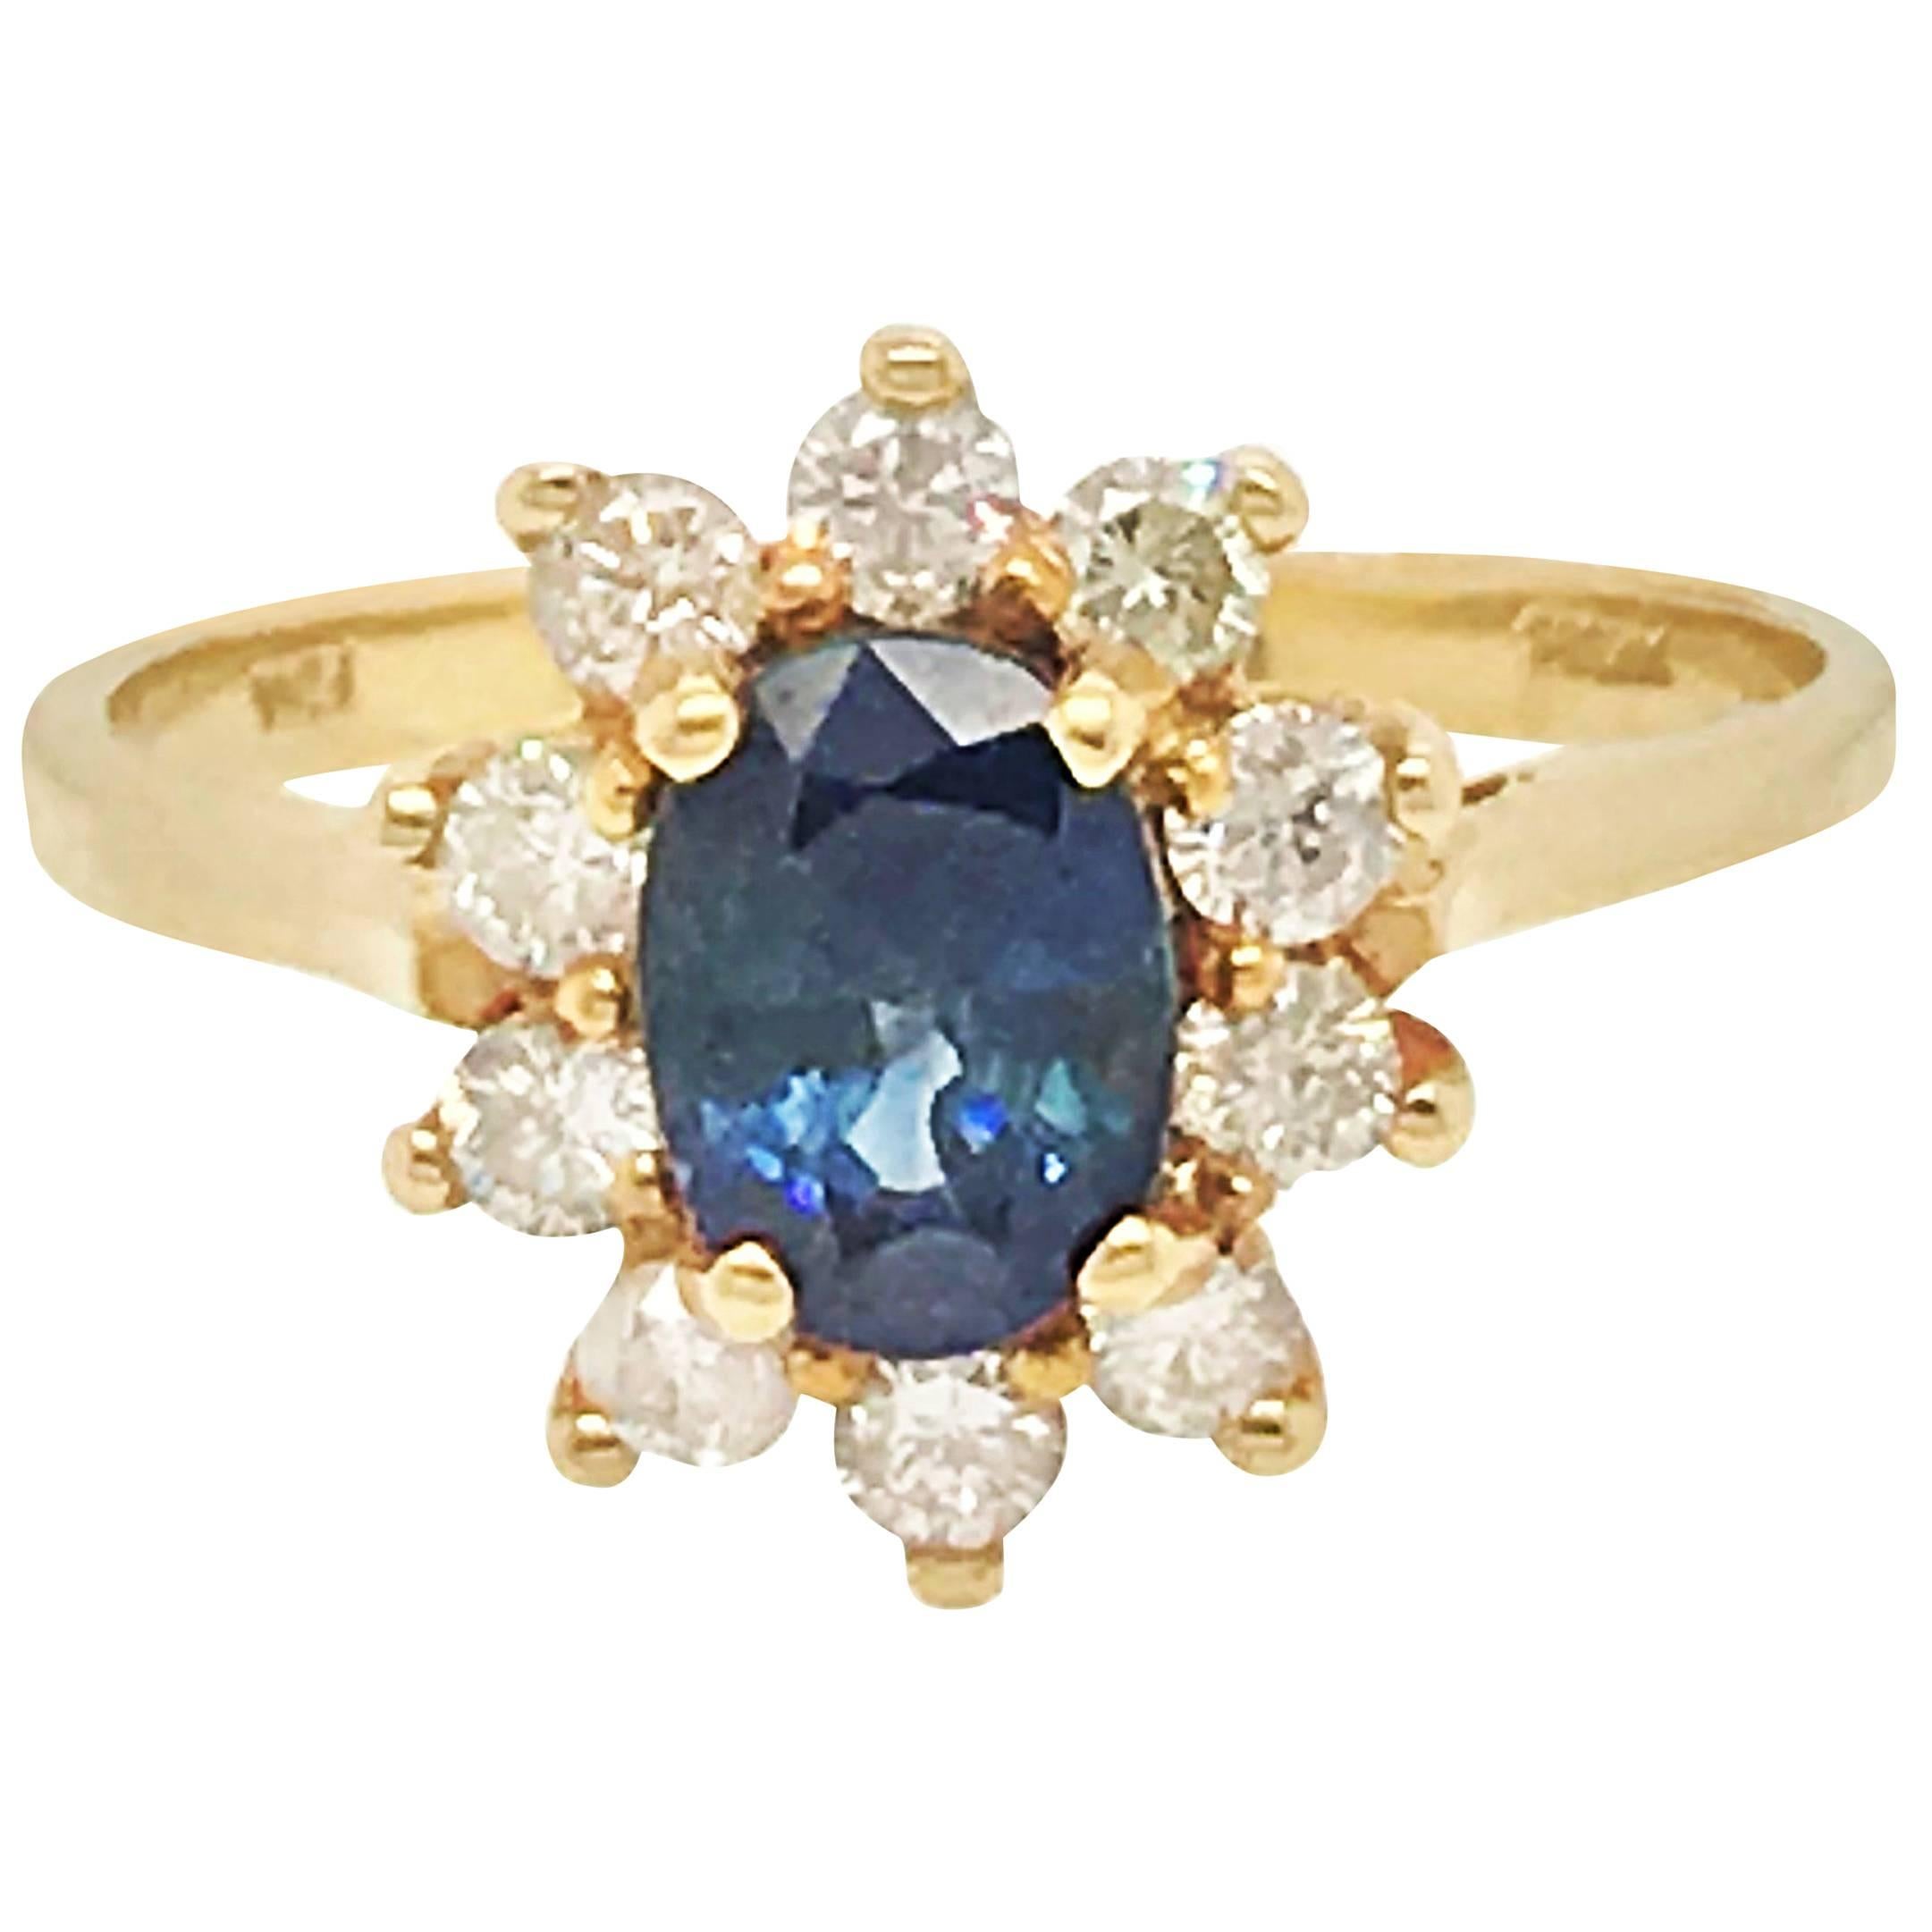 1 Carat Sapphire and Diamond Ring in 14 Karat Yellow Gold